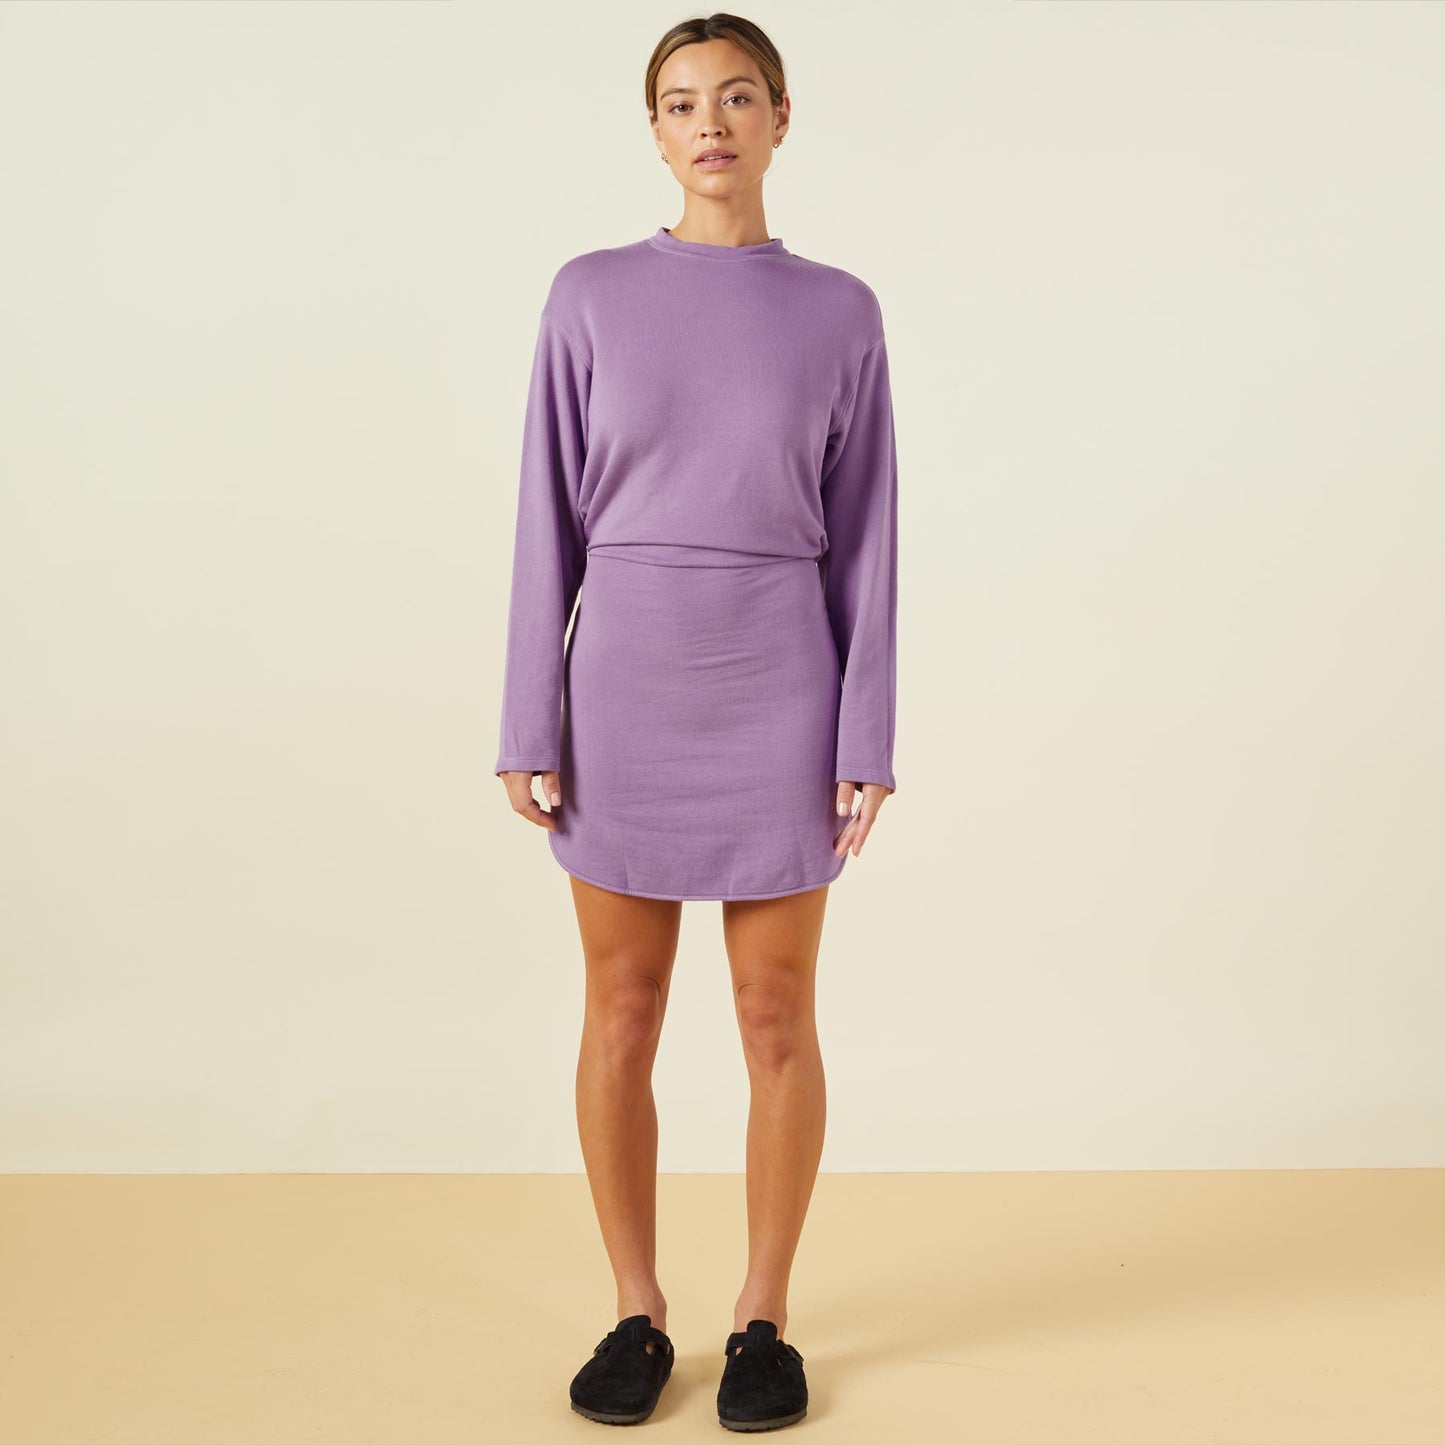 Front view of model wearing the supersoft fleece sweatshirt dress in aster purple.